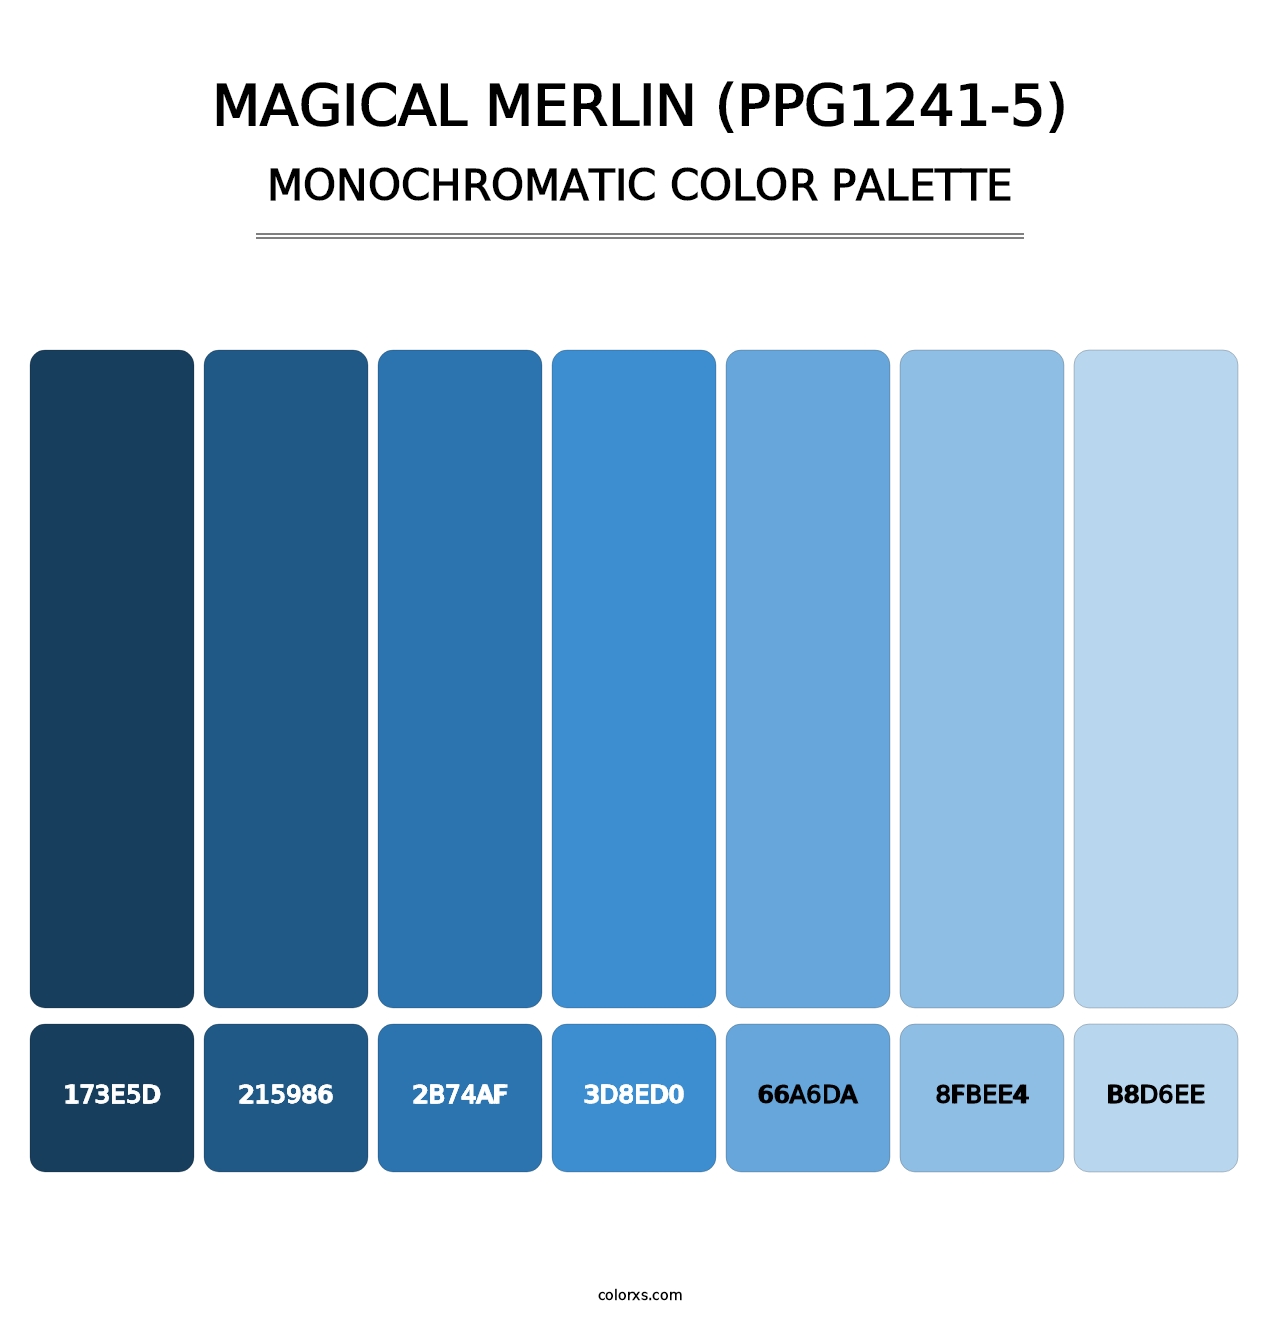 Magical Merlin (PPG1241-5) - Monochromatic Color Palette